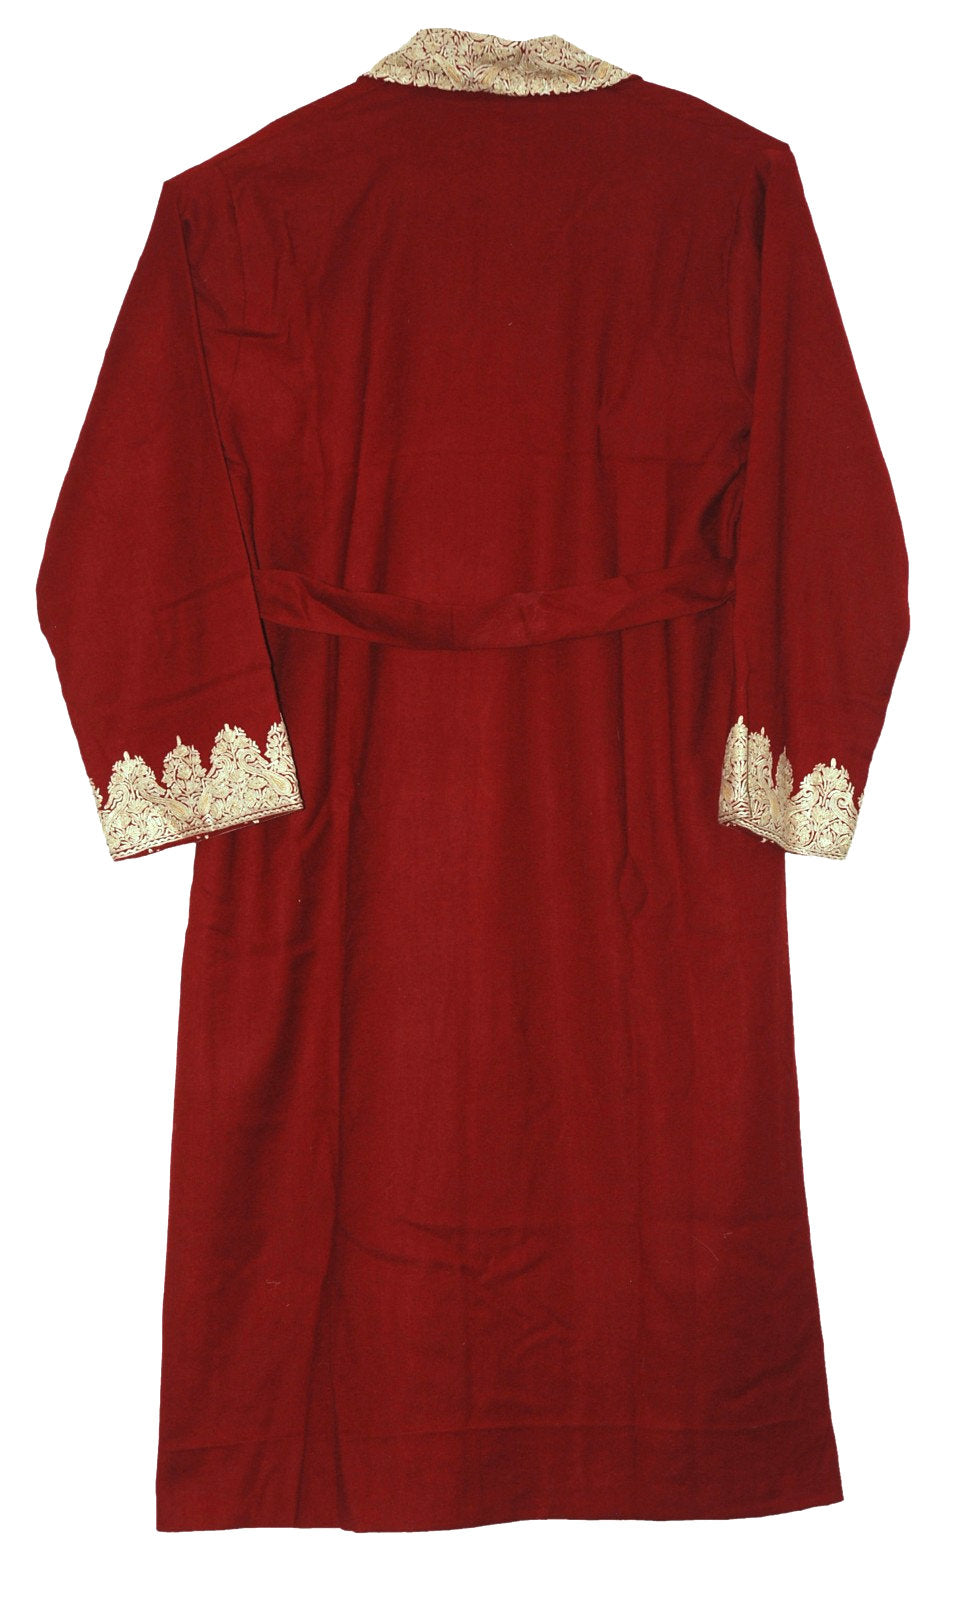 Woolen Gents Dressing Gown Maroon, Cream Embroidery #WG-103